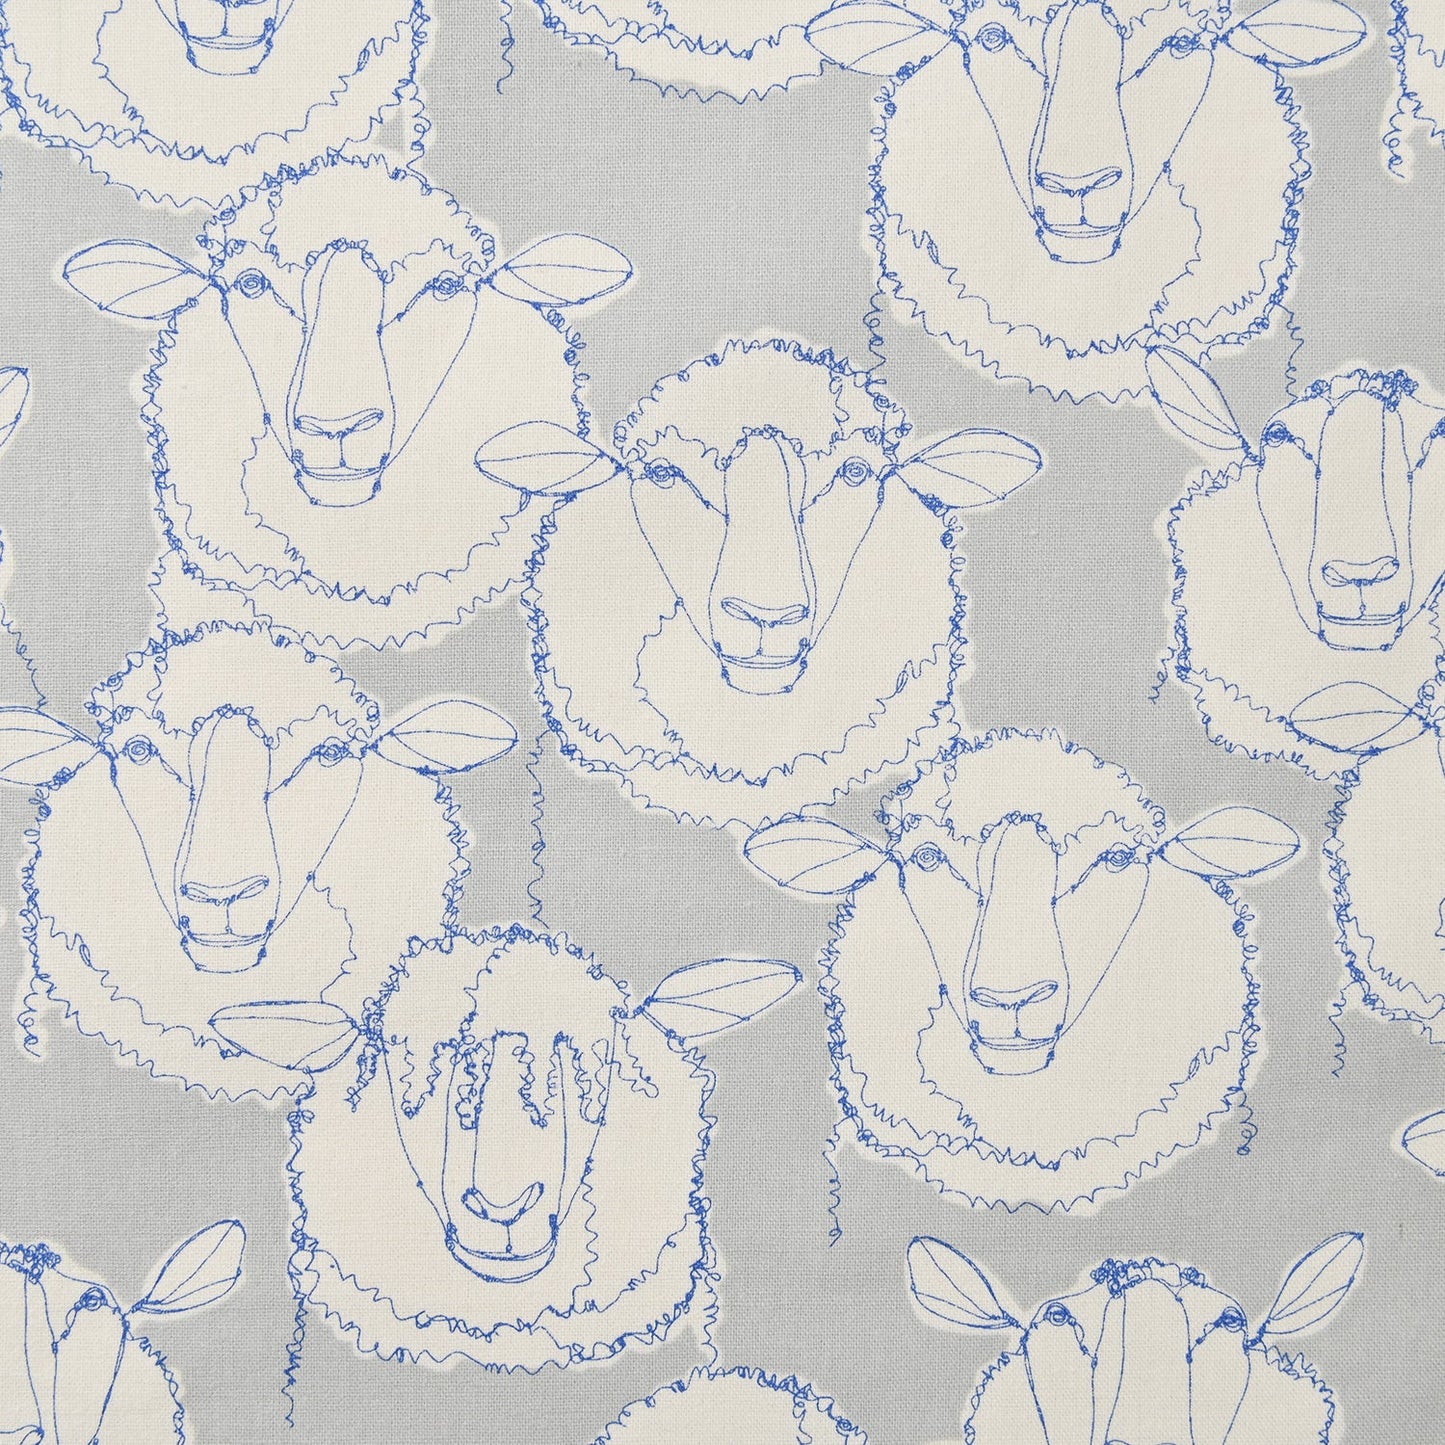 Hayu Fabric “Sheep” Canvas